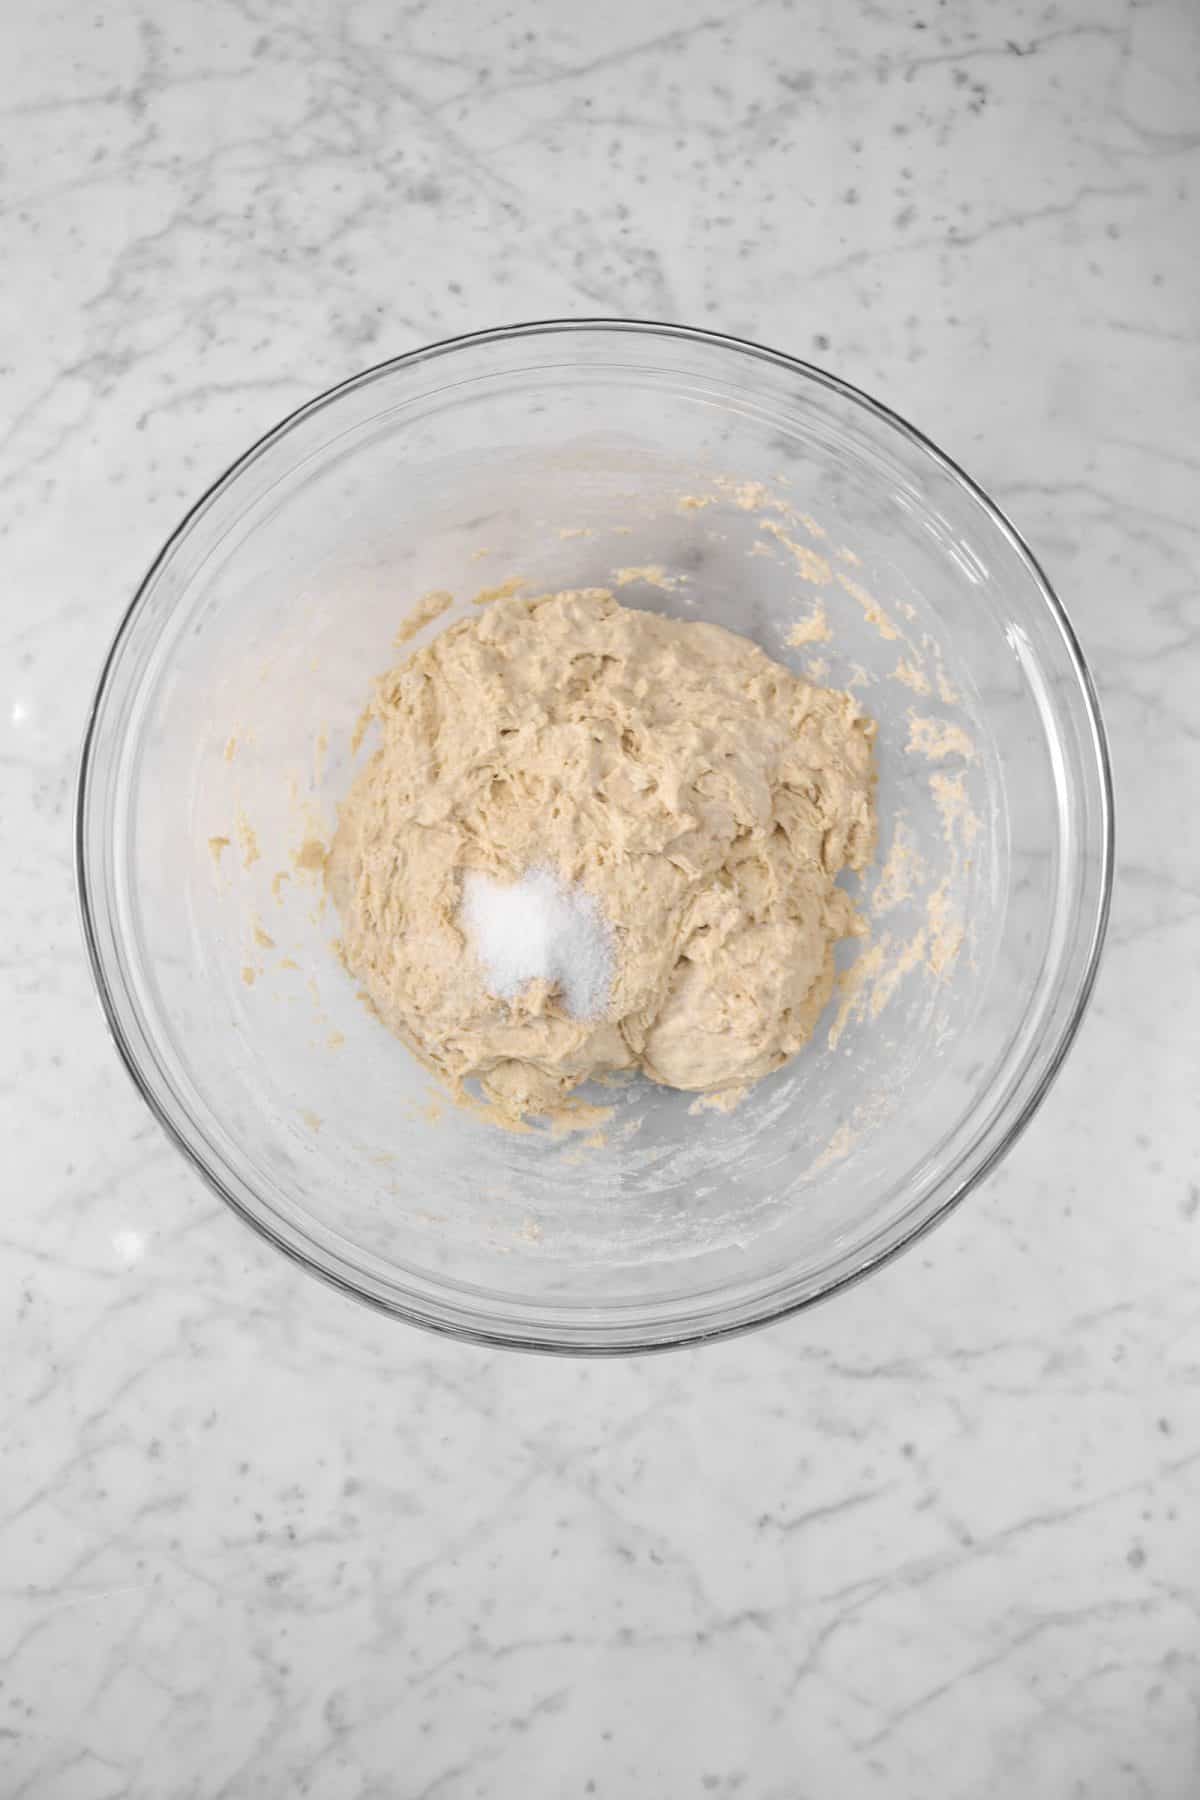 salt added to sourdough dough